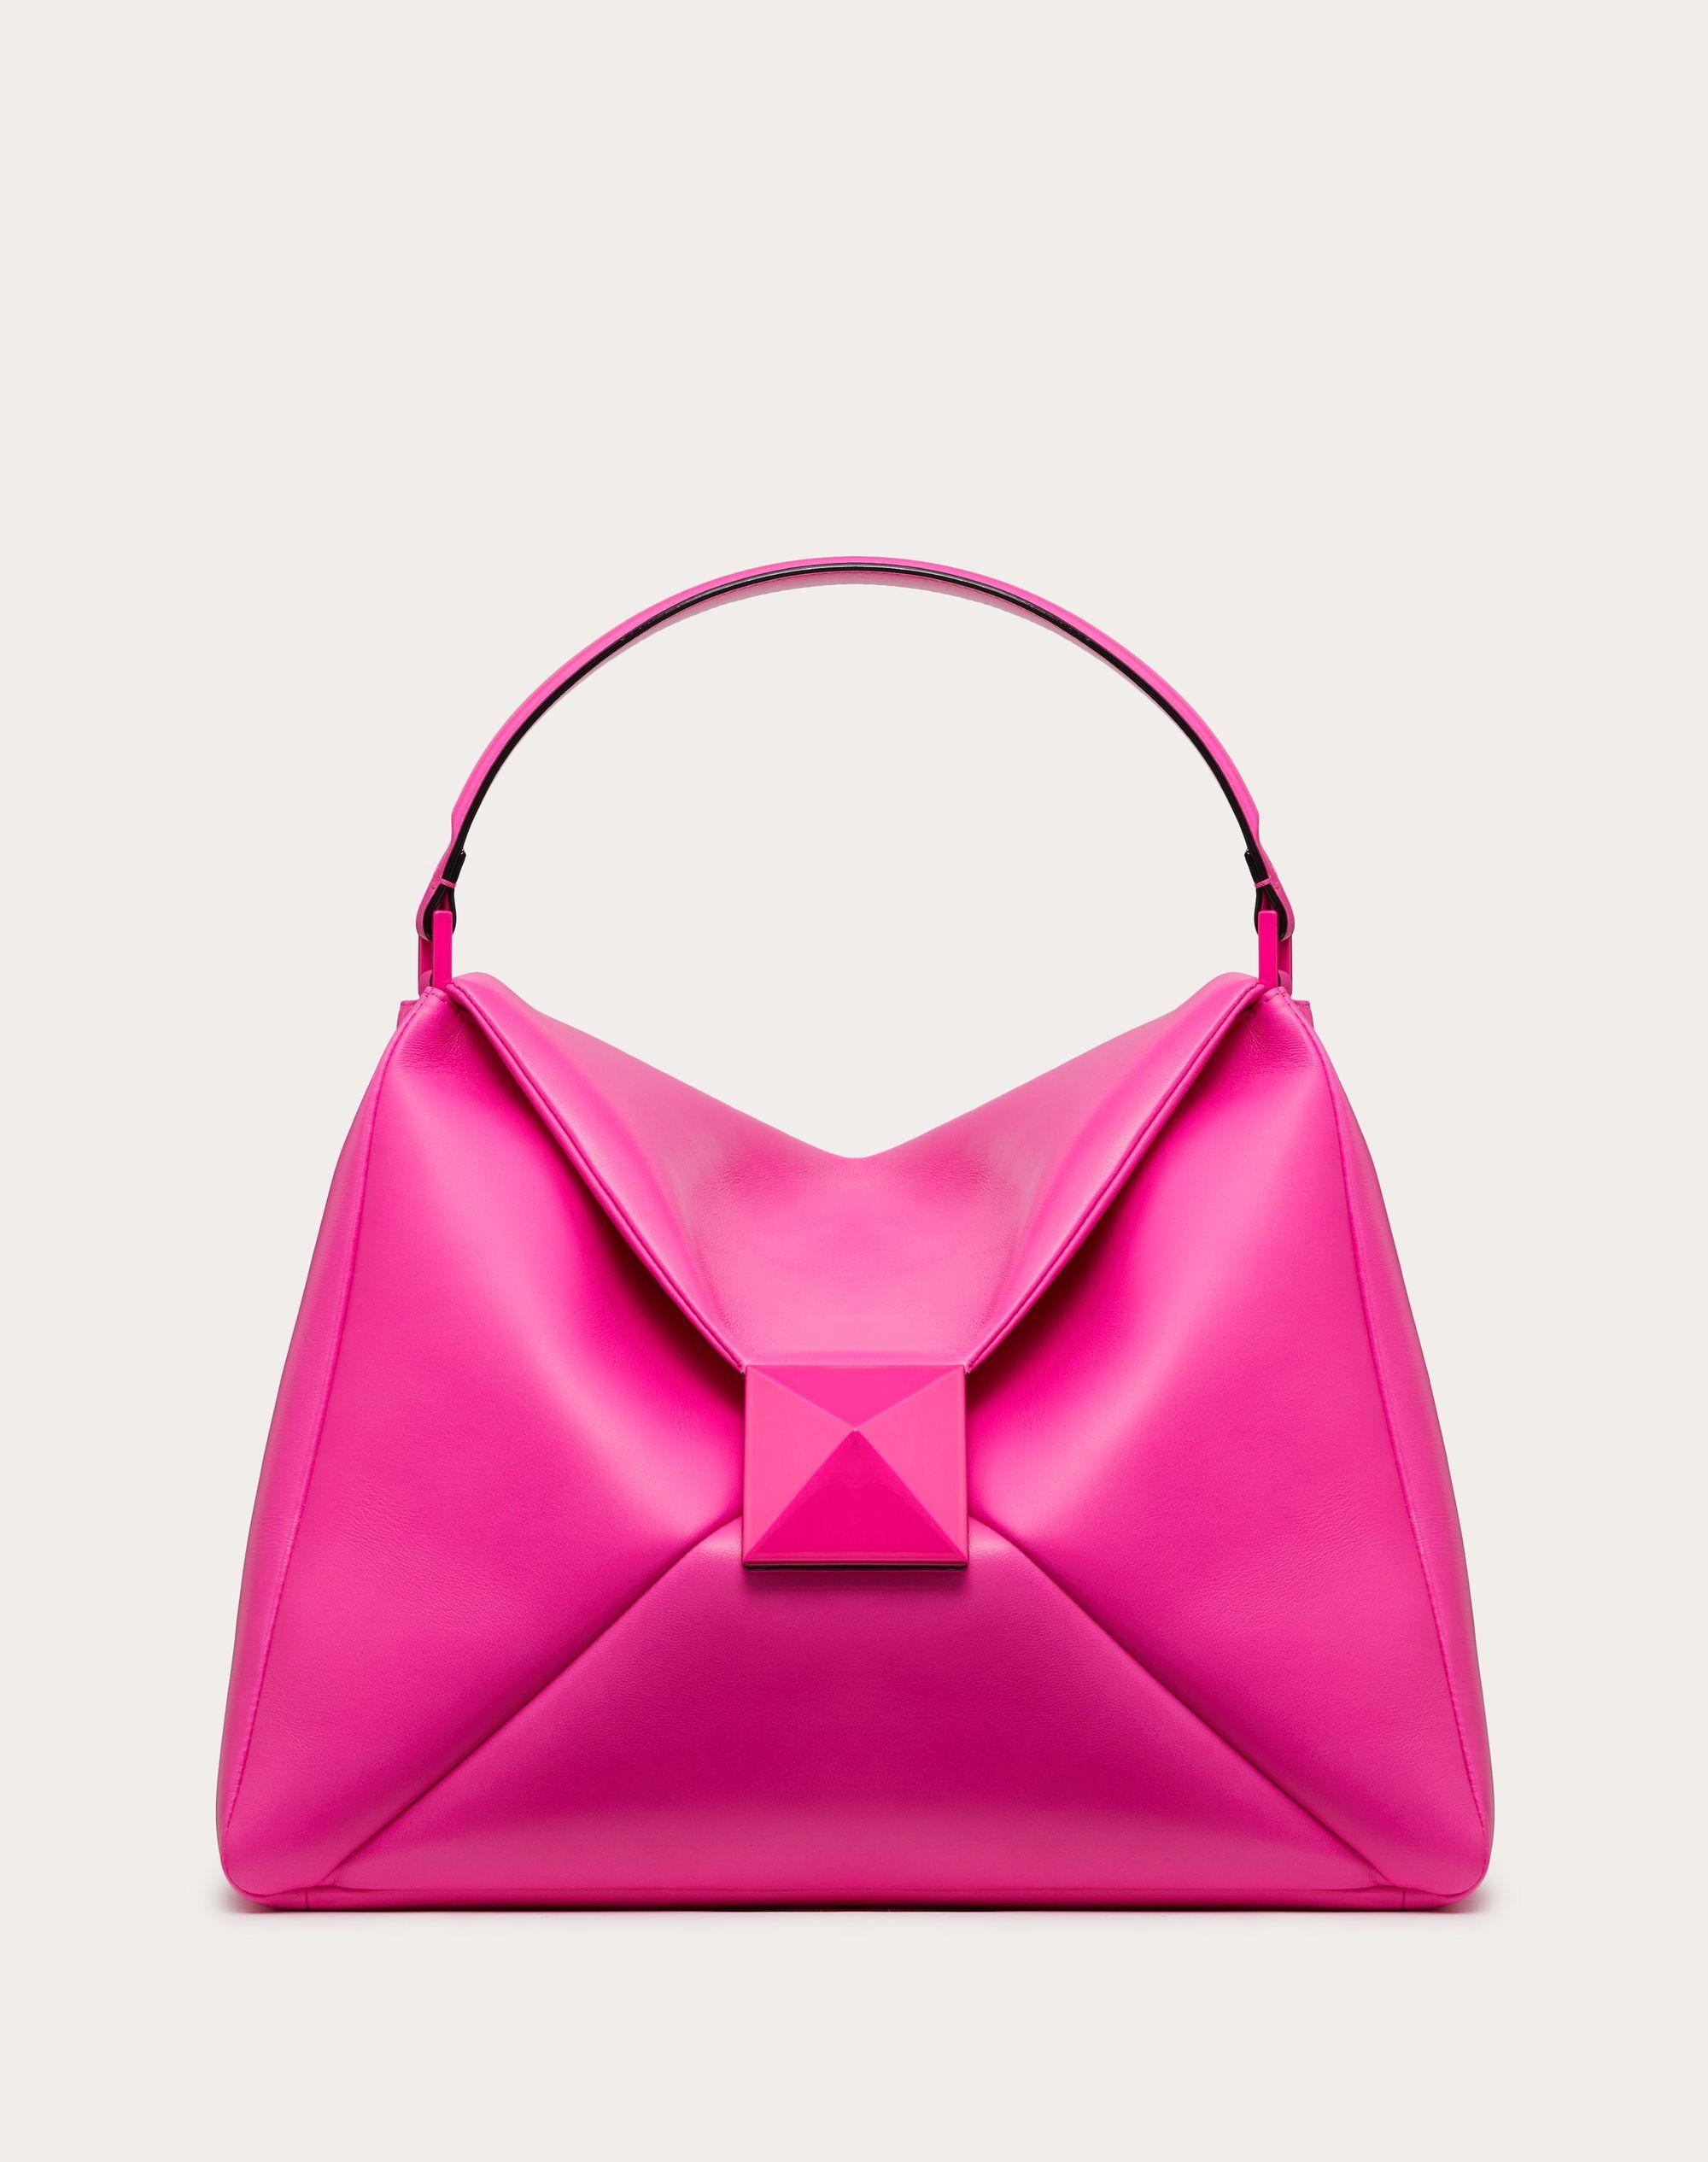 Valentino Garavani One Stud Nappa Leather Maxi Hobo Bag in Pink | Lyst